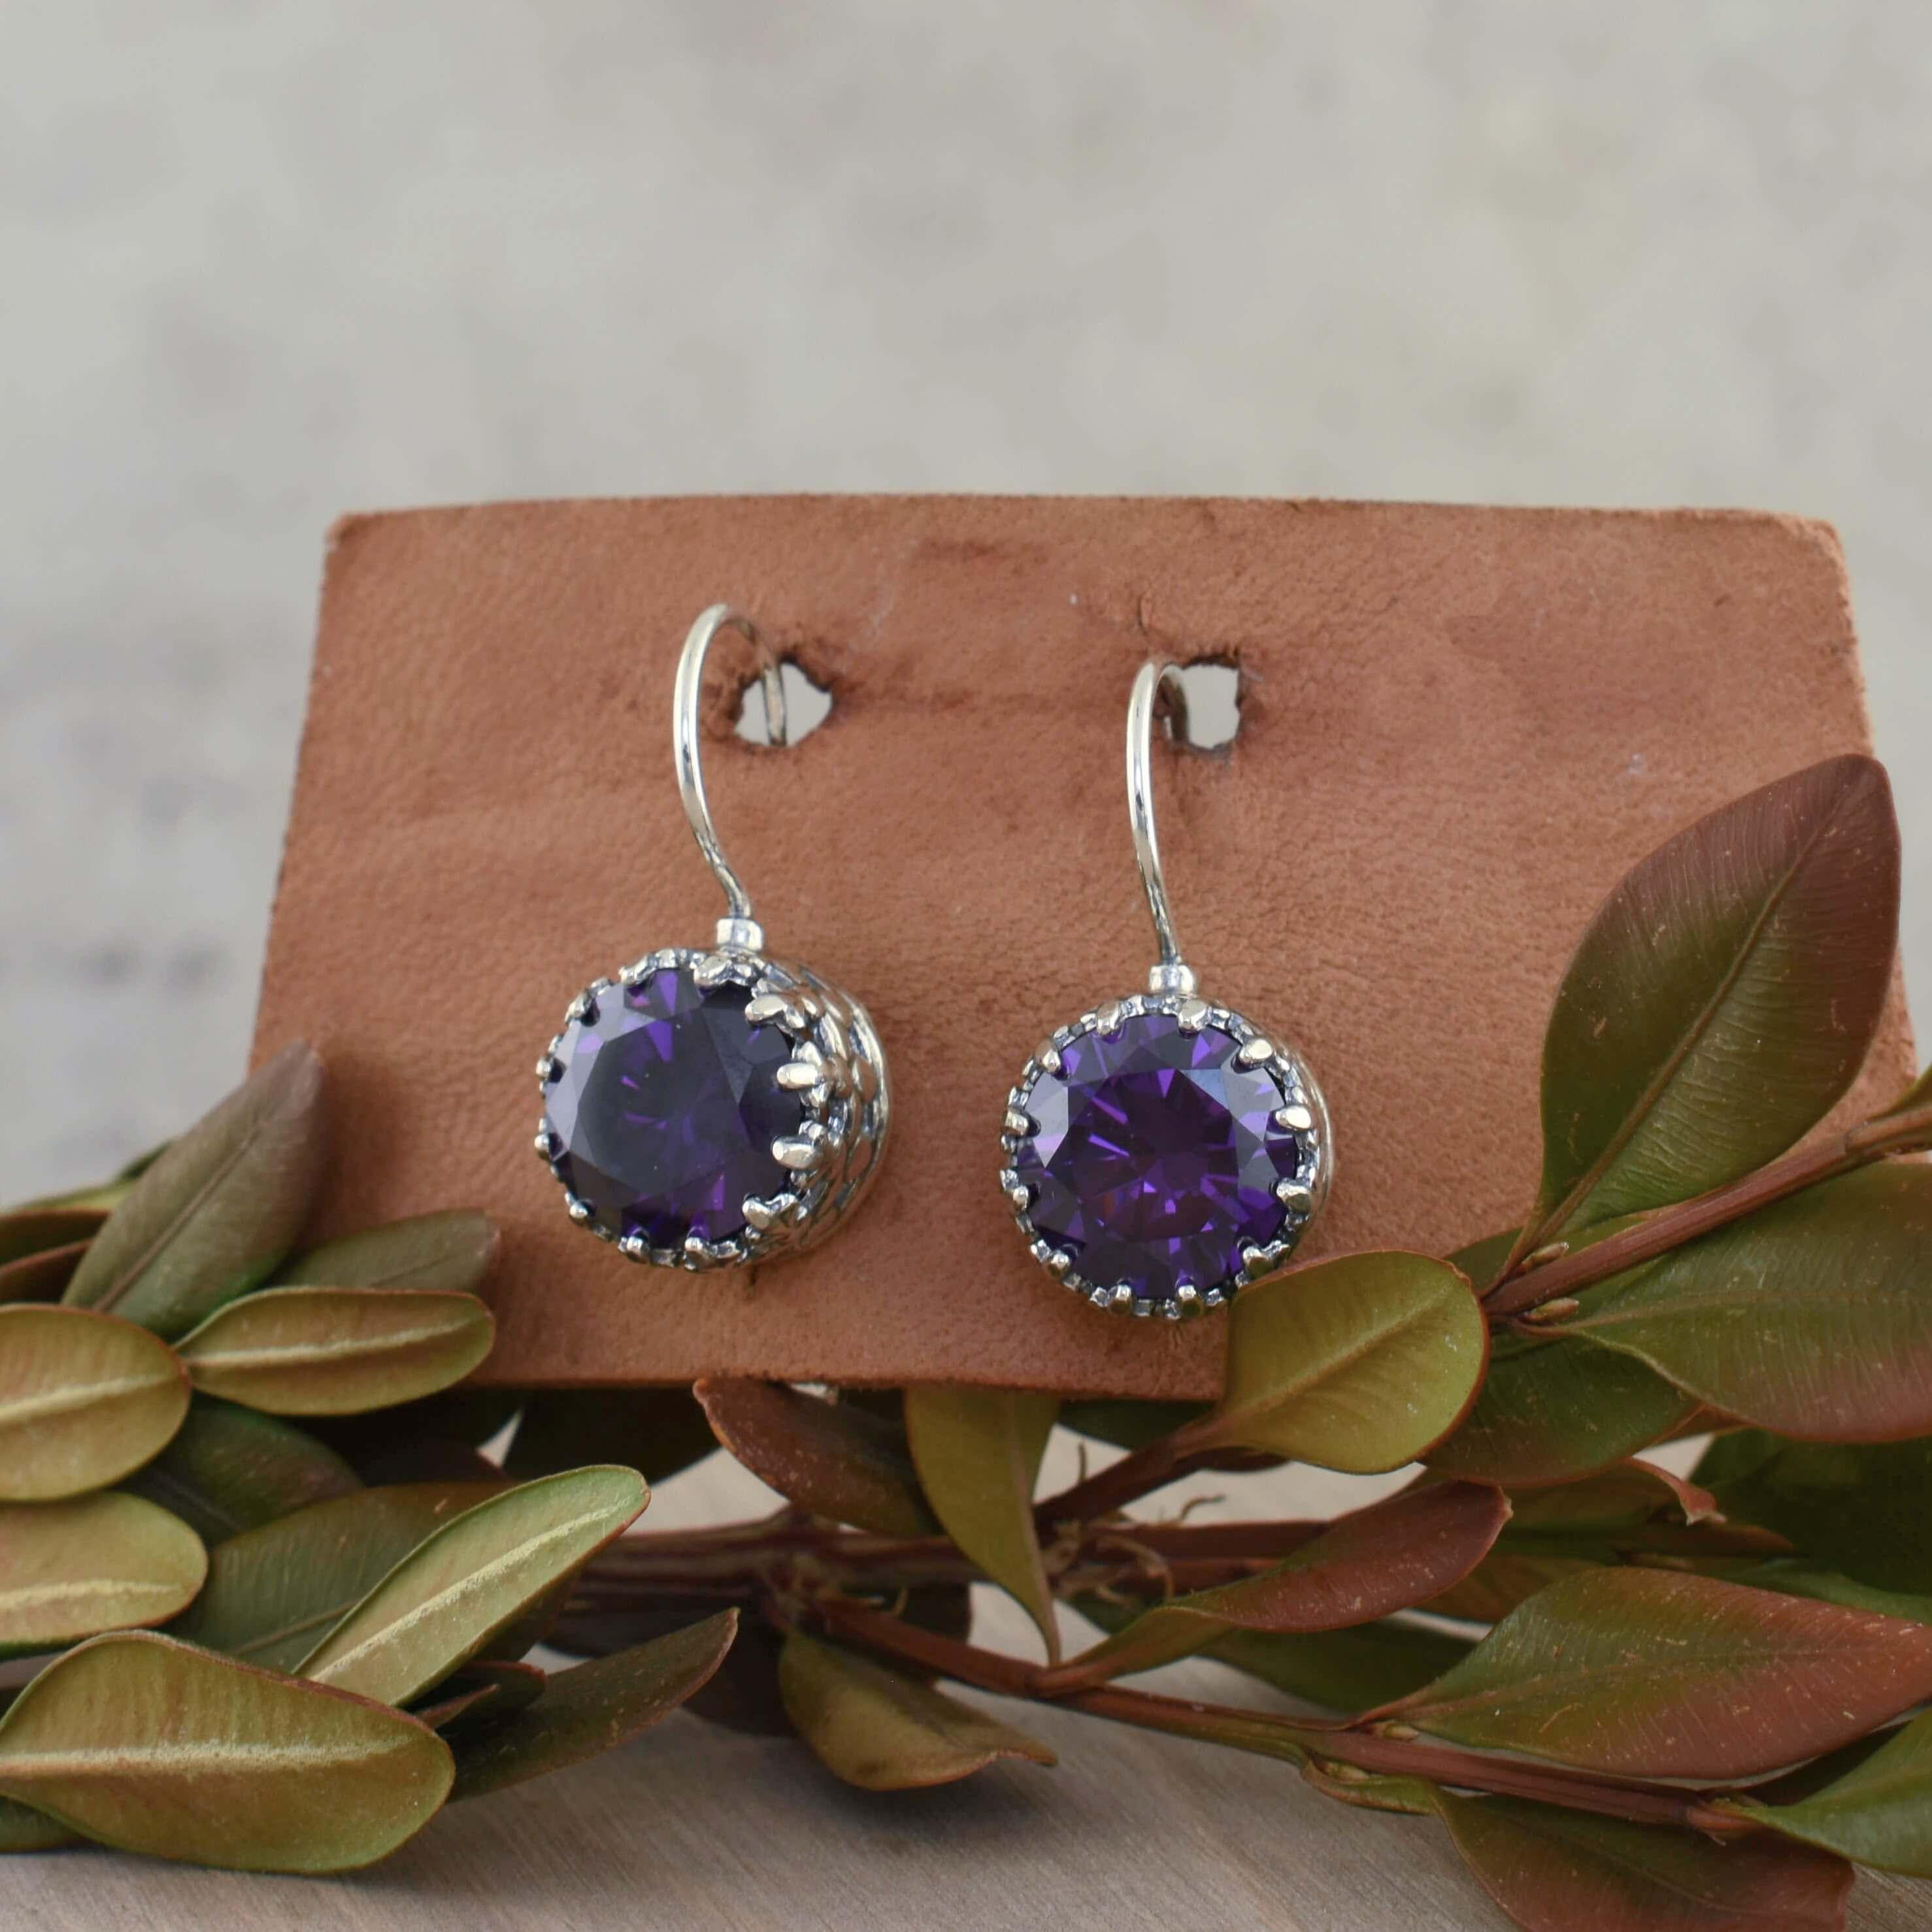 African Violet Earrings in sterling silver and deep purple-violet CZ